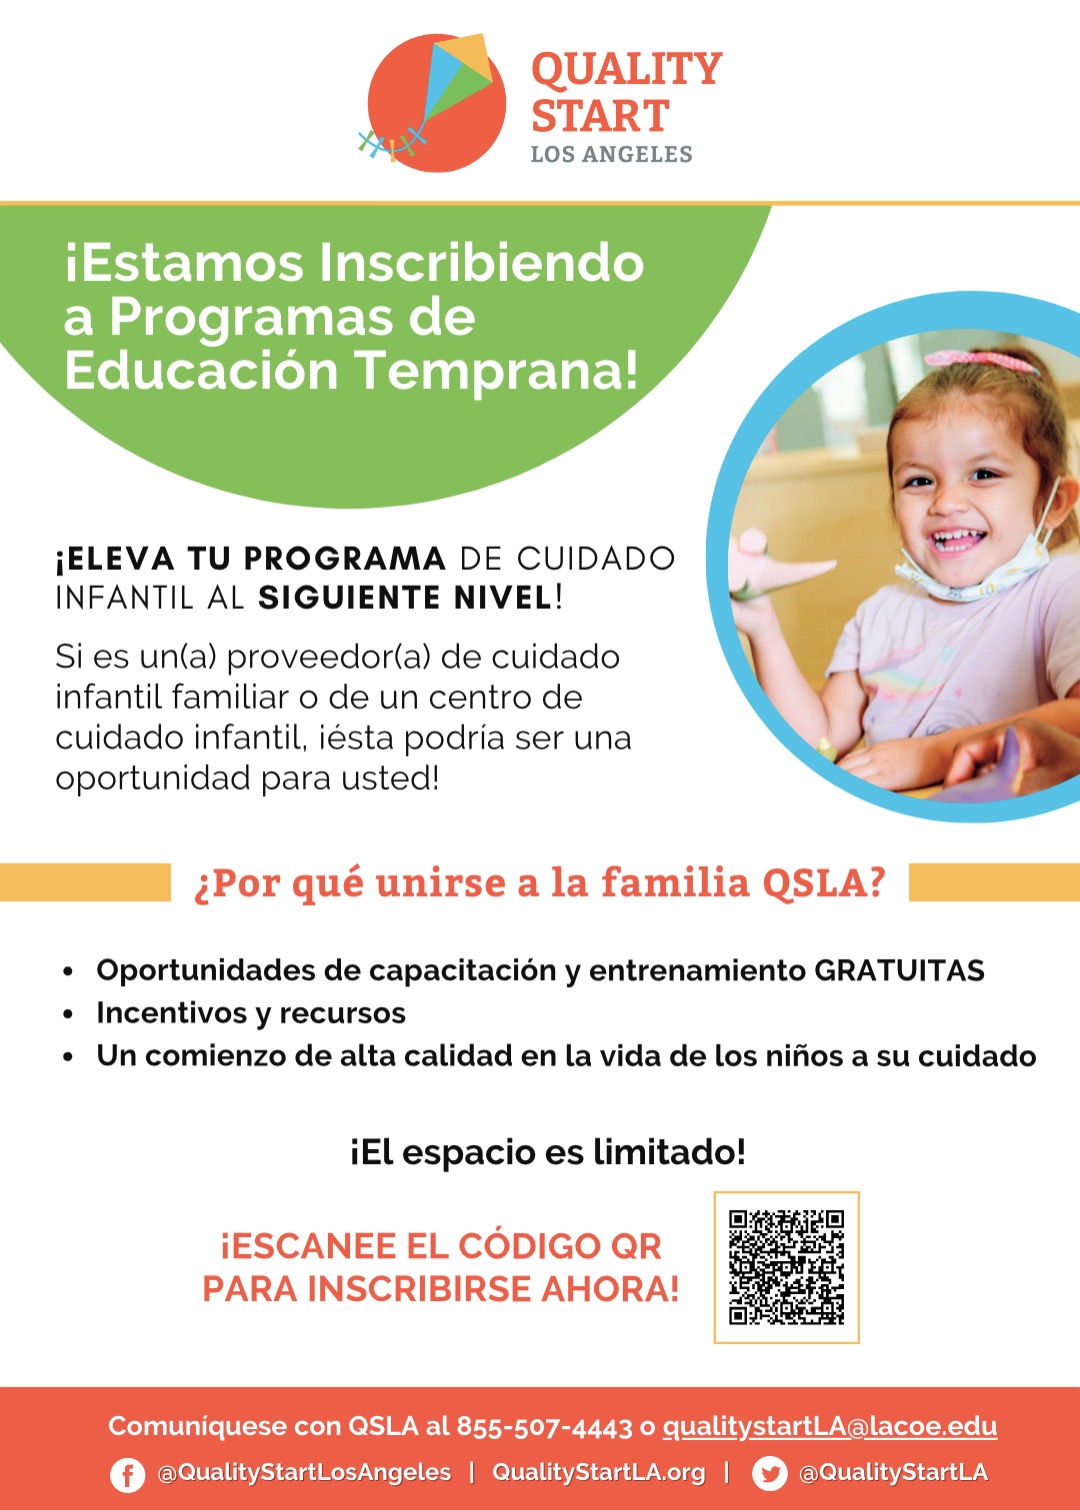 We're Enrolling Early Learning Programs! - Spanish Flyer